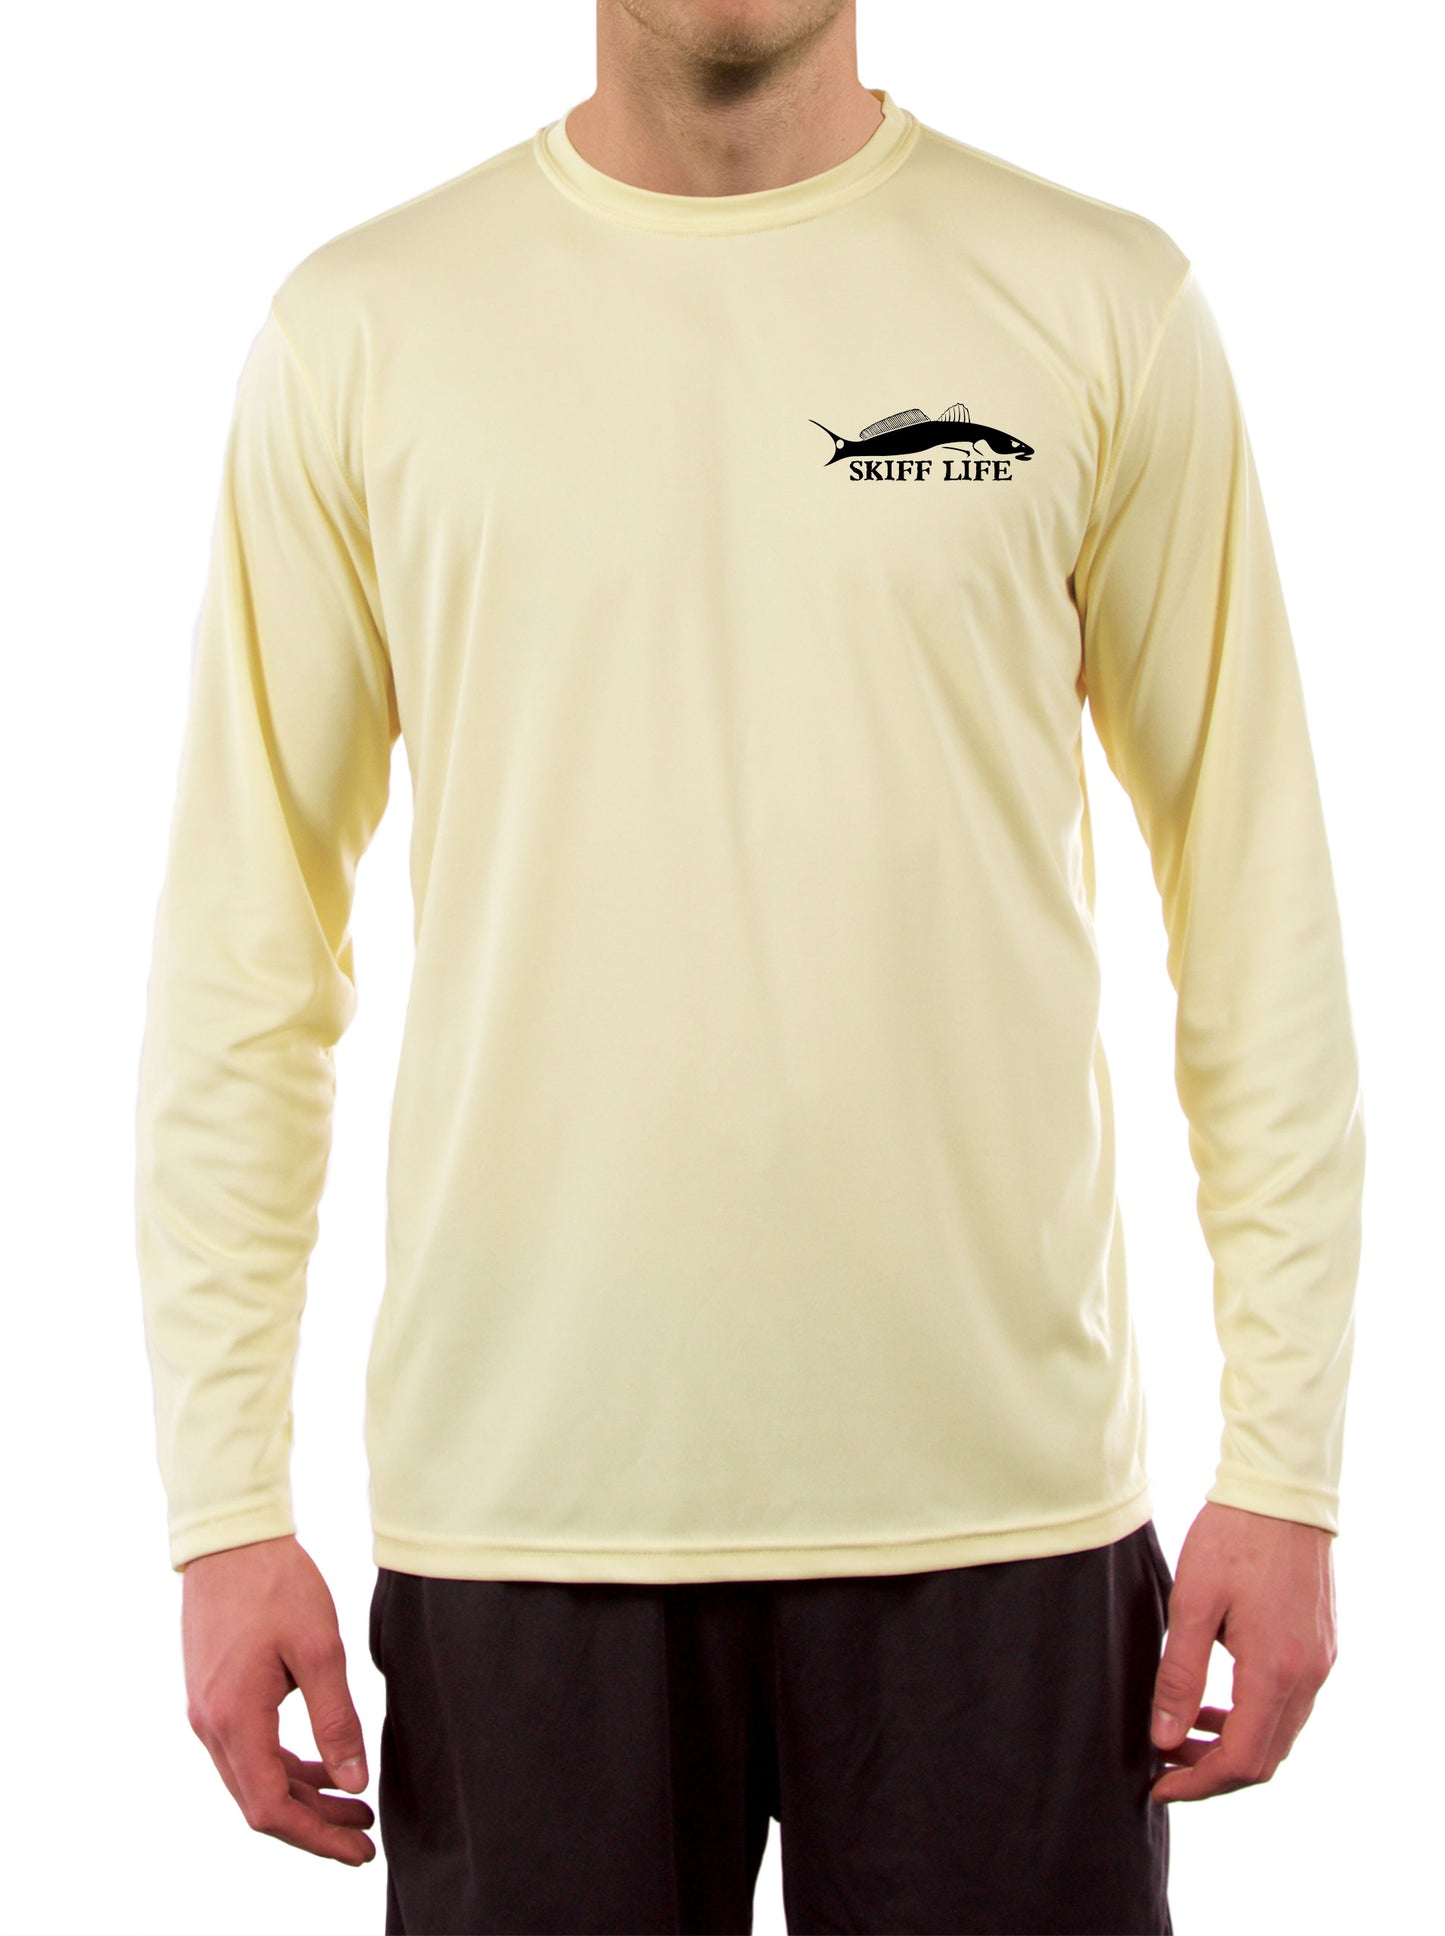 Fishing Shirts Men's Quick Dry Lightweight UPF 50+ Long Sleeve Shirts Rash Guard Swim Shirts Hiking Shirts Moisture Wicking X-Large / Seagrass